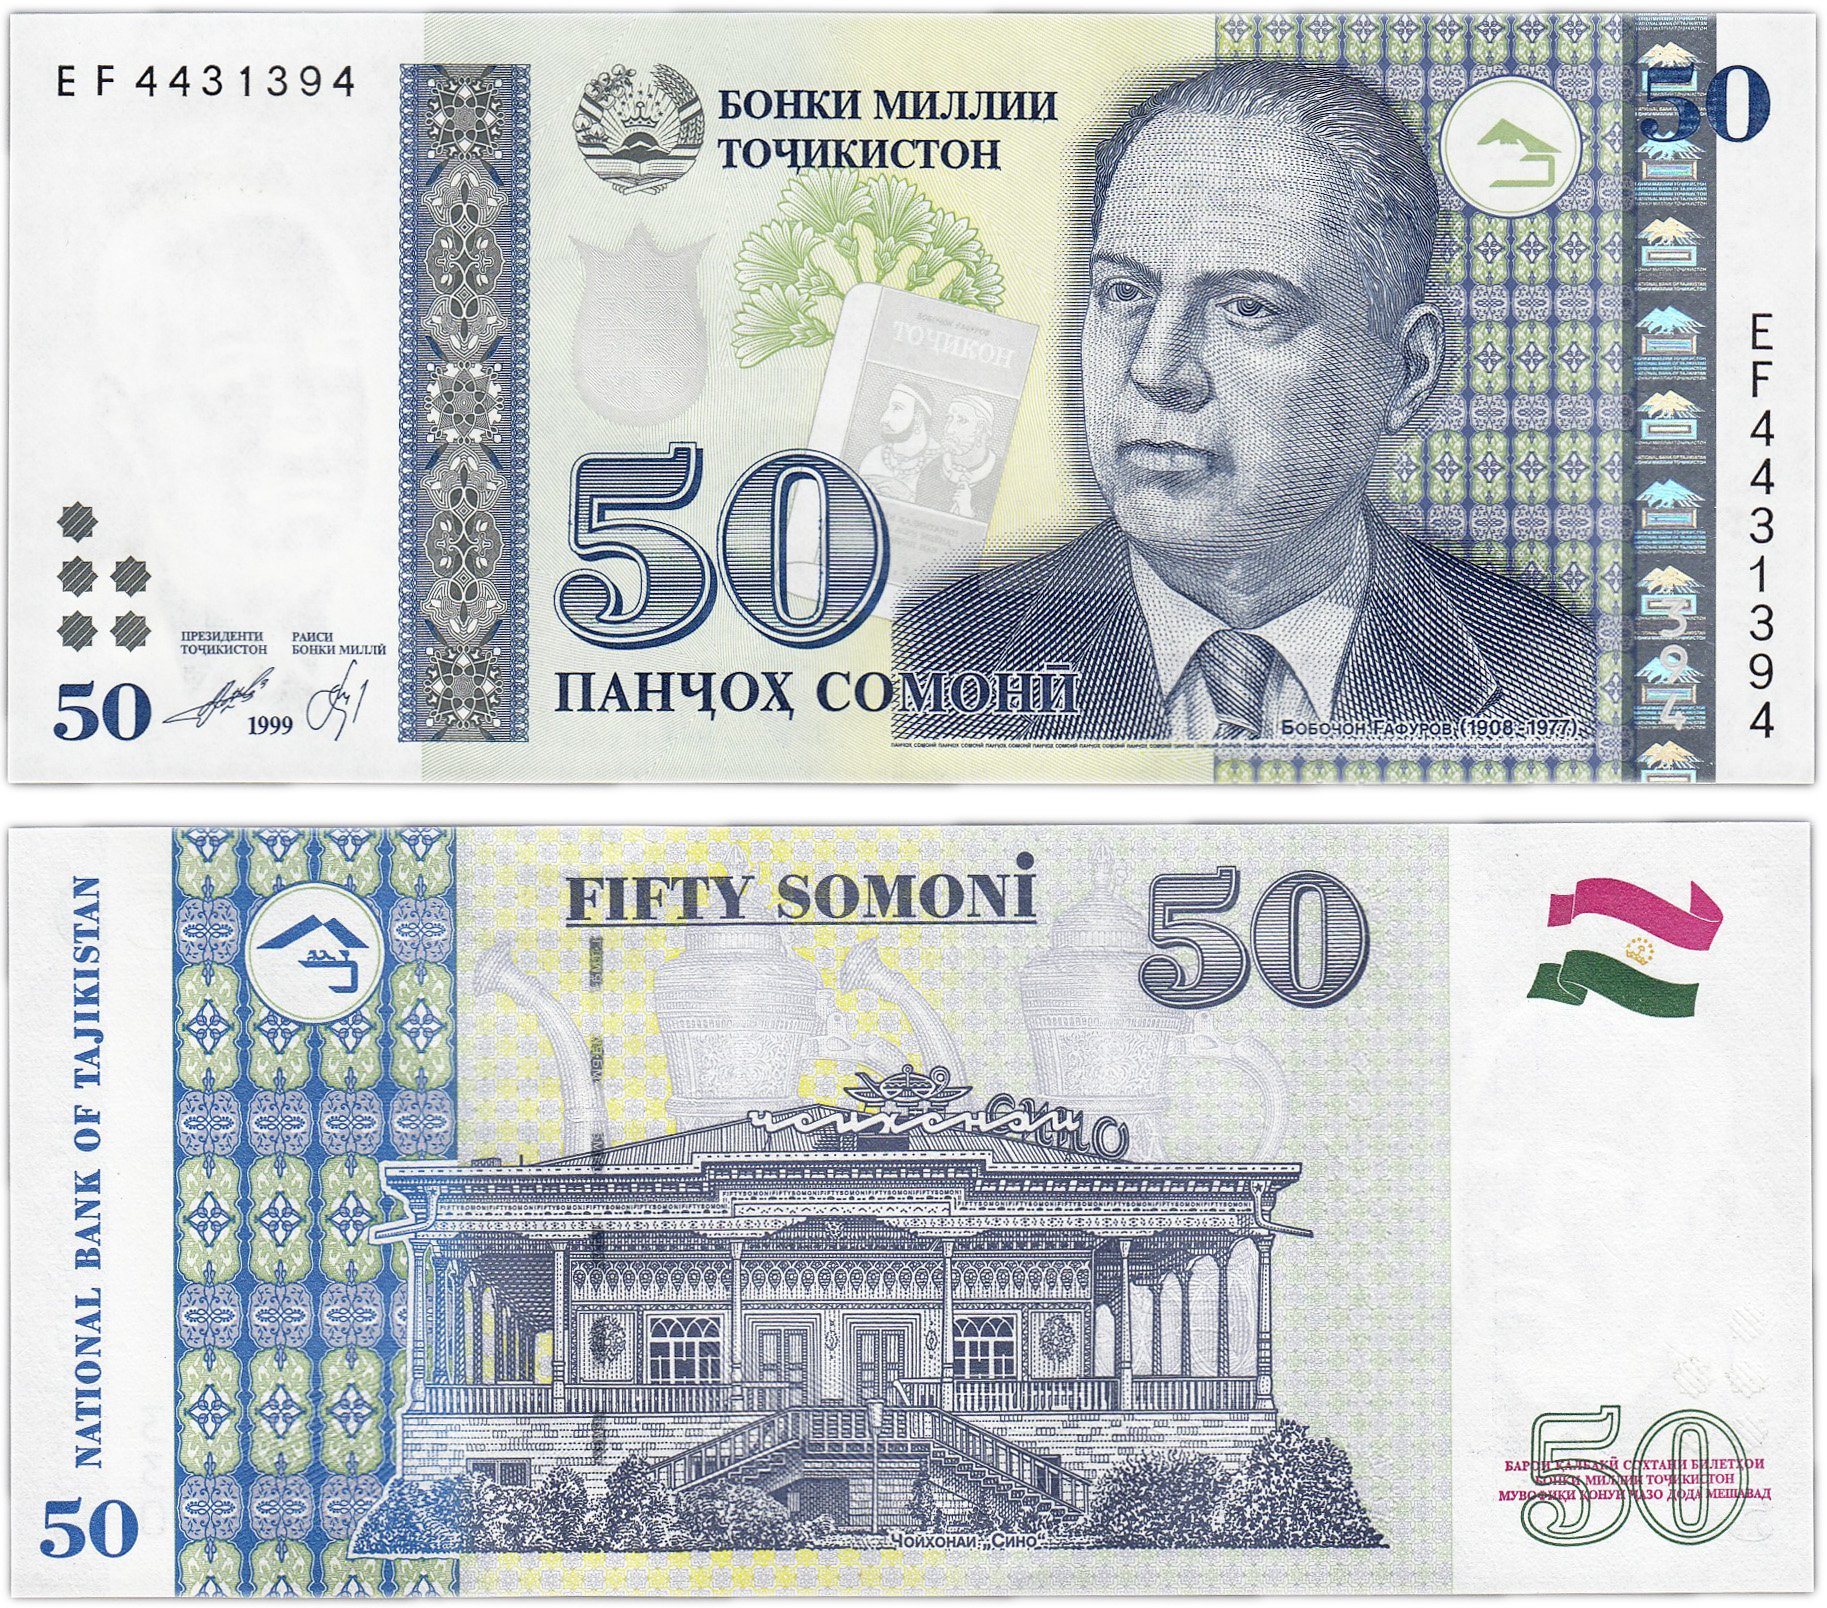 Деньги в душанбе. 100 Сомони 1999. Таджикский купюры 500 Сомони. Таджикистан банкнота 20 Сомони 1999. Деньги Таджикистана 500 Сомони.